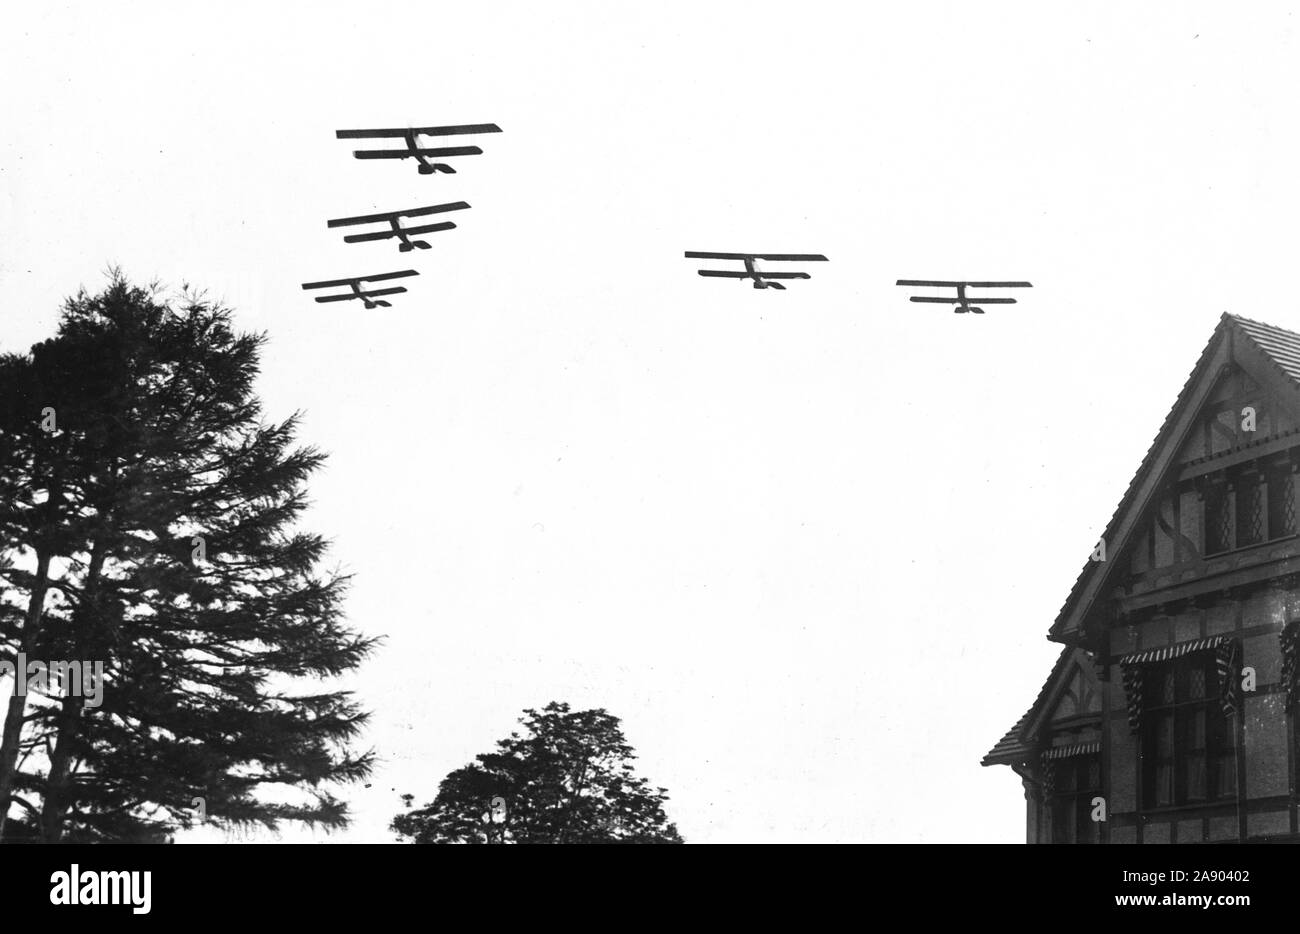 7/8/1918 - Demonstration Flug in Oyster Bay, New York, fünf Flugzeuge, die in Schlachtordnung in Oyster Bay, L.I Stockfoto